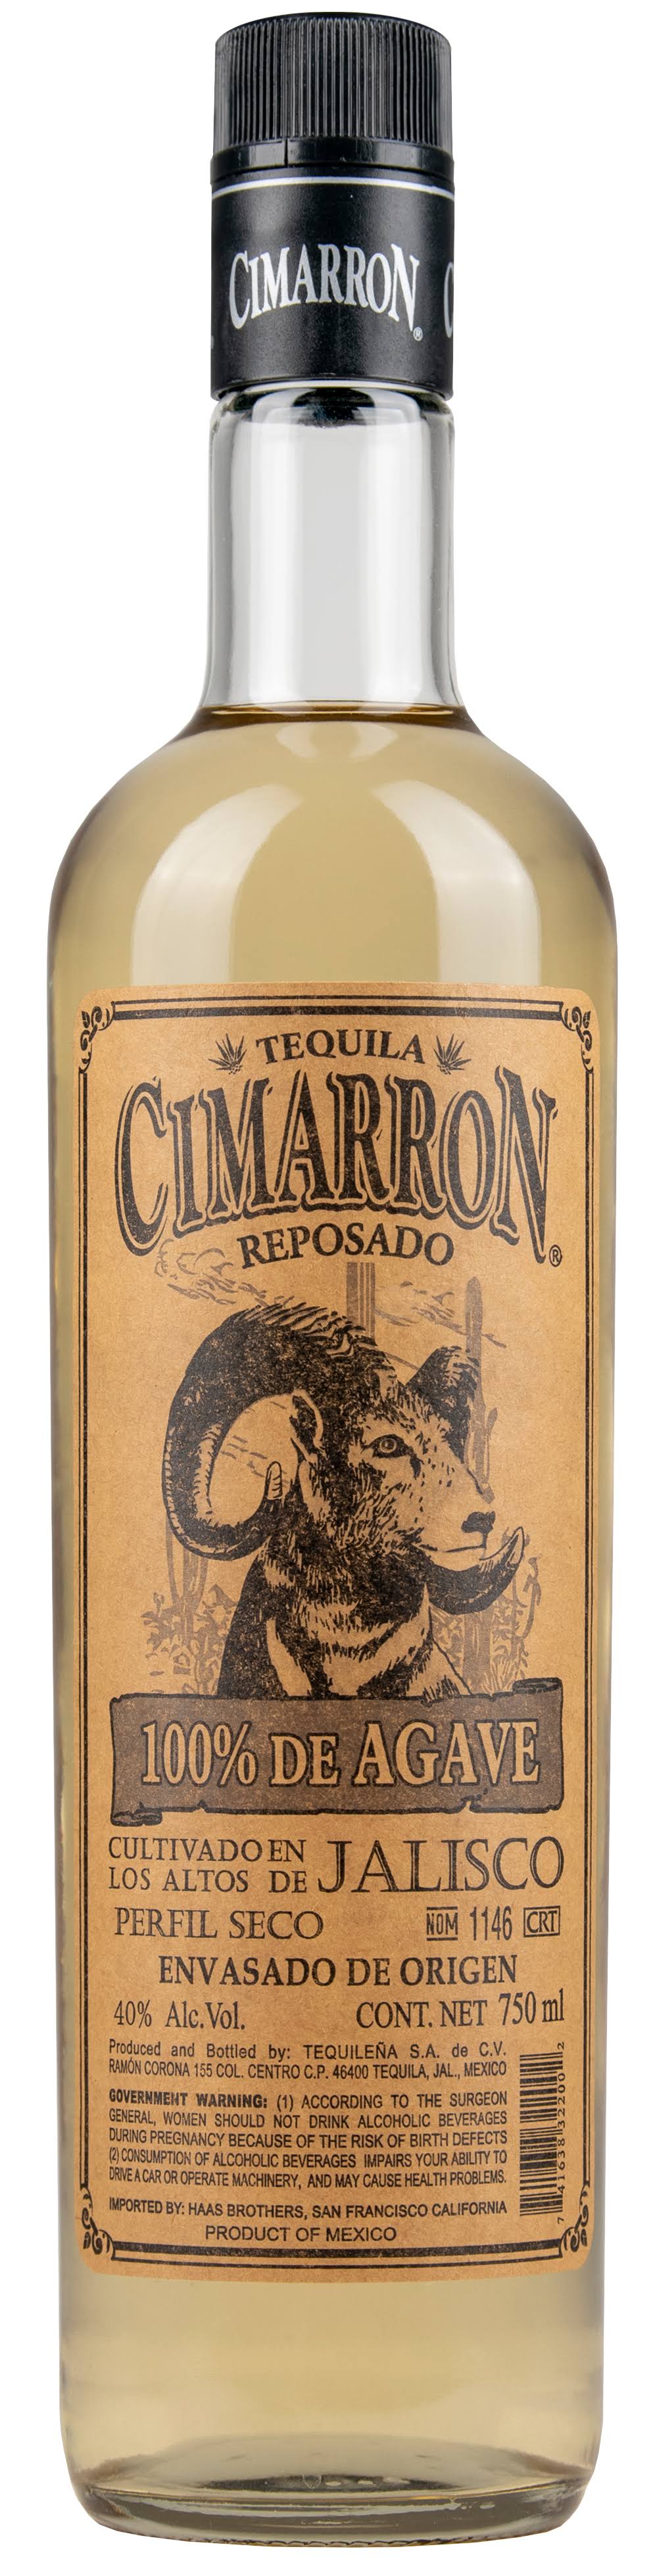 Cimarron Reposado Tequila - 750 ml